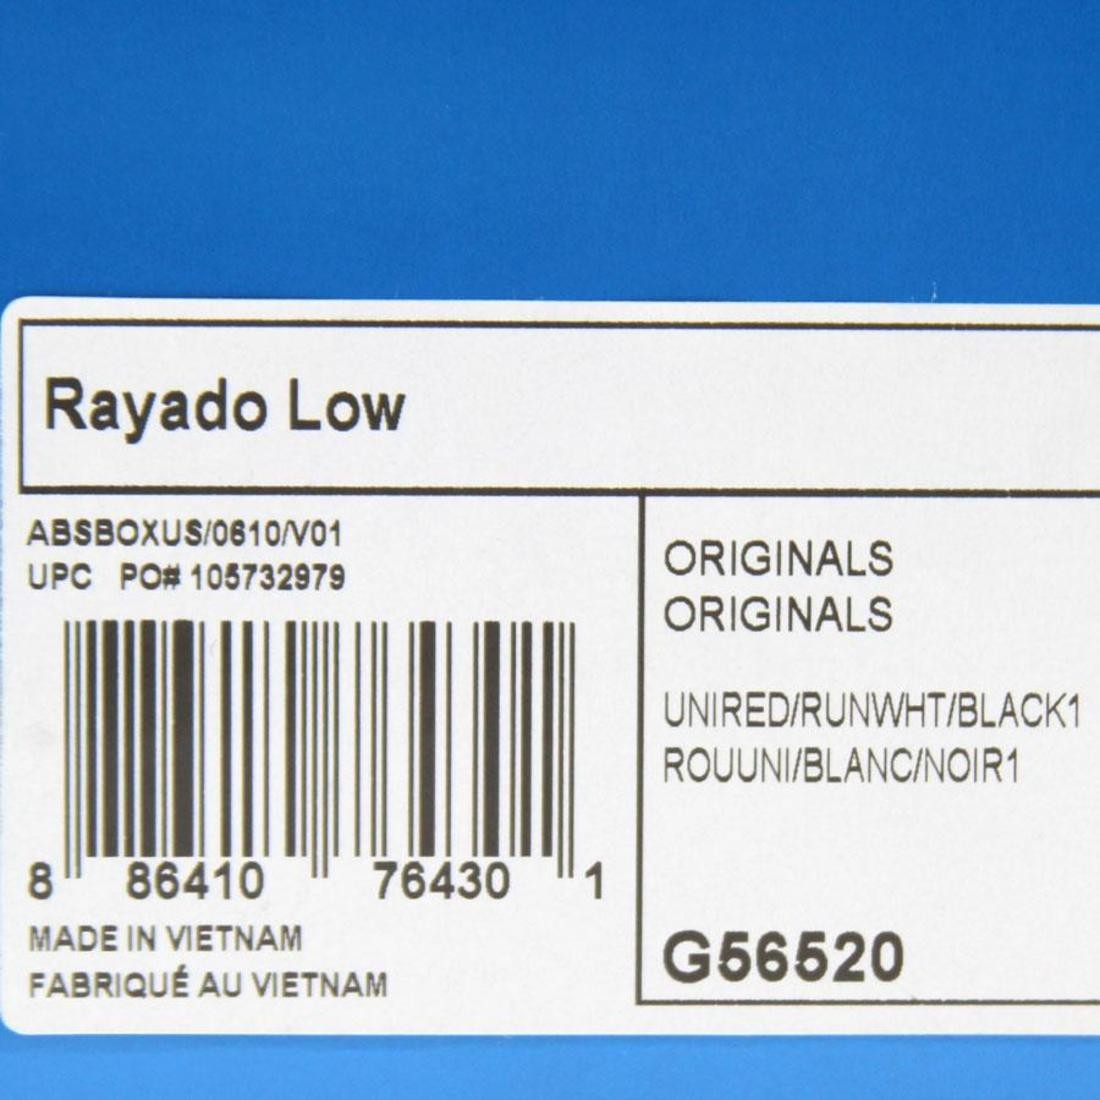 Adidas Skate Rayado Low (university red / runninwhite black)